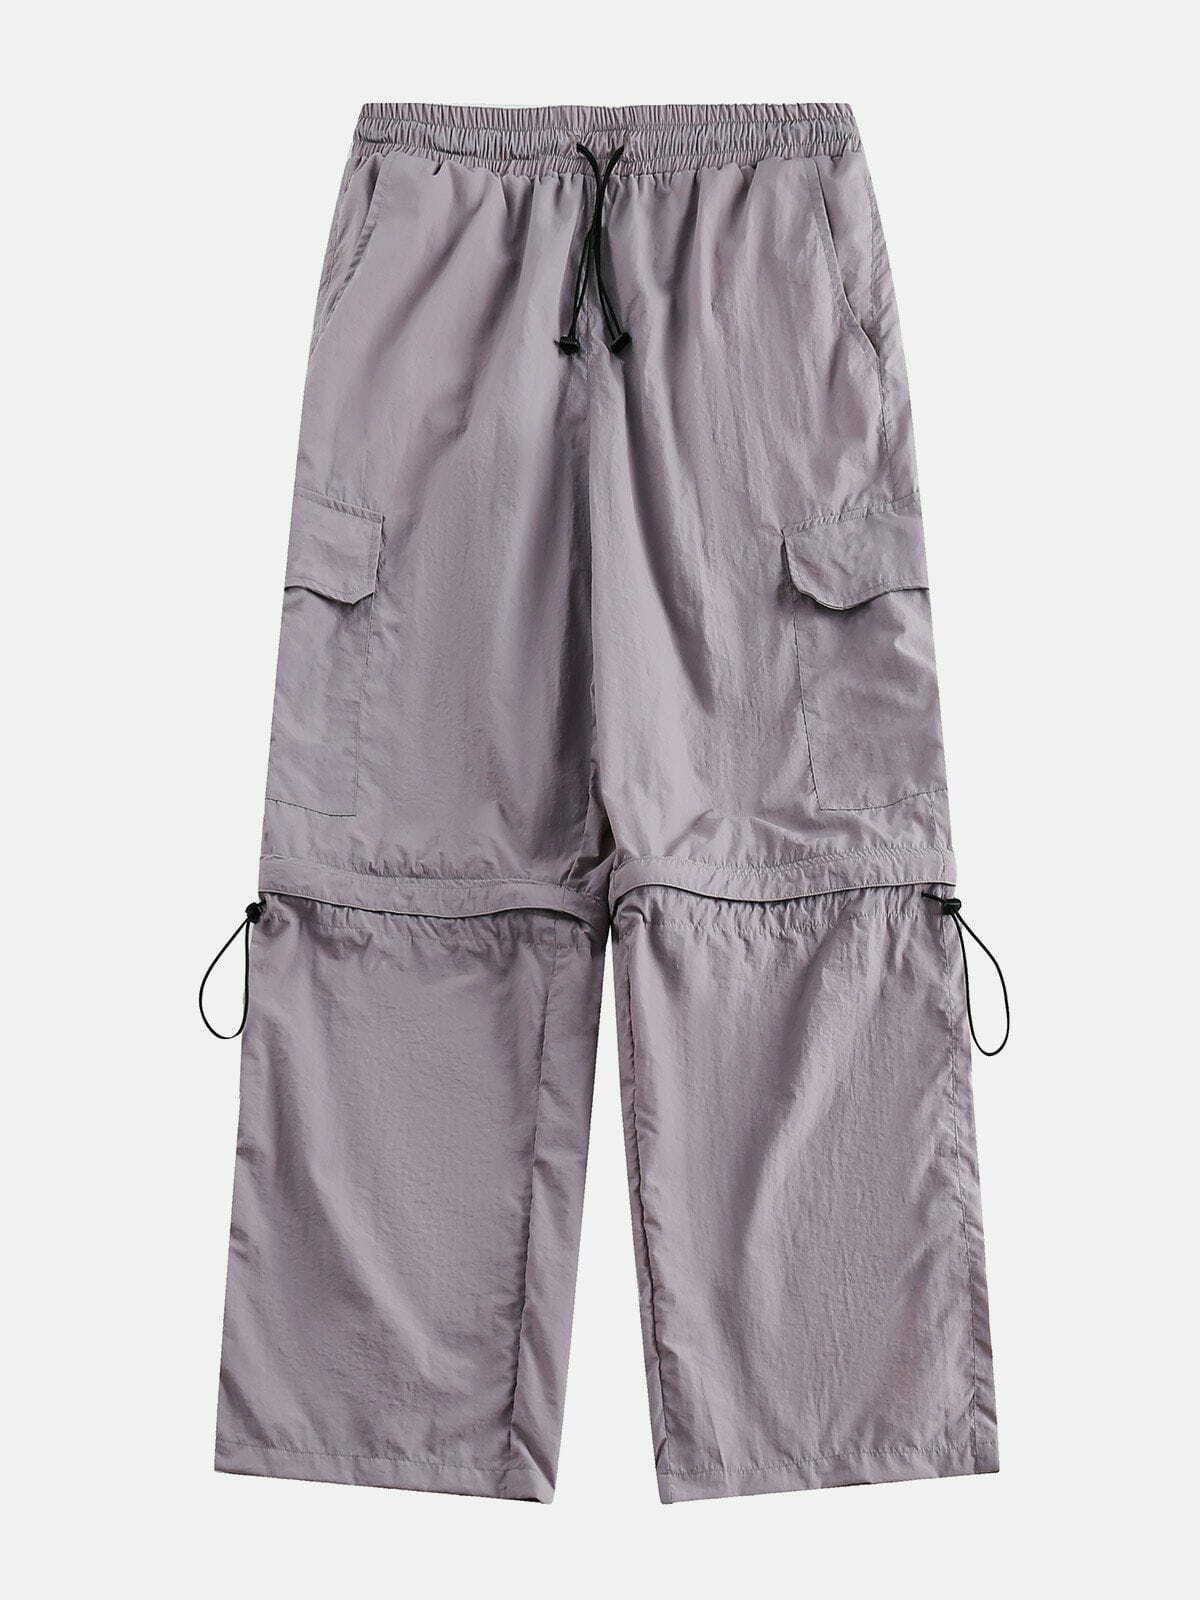 detachable sweatpants versatile & youthful street look 7649